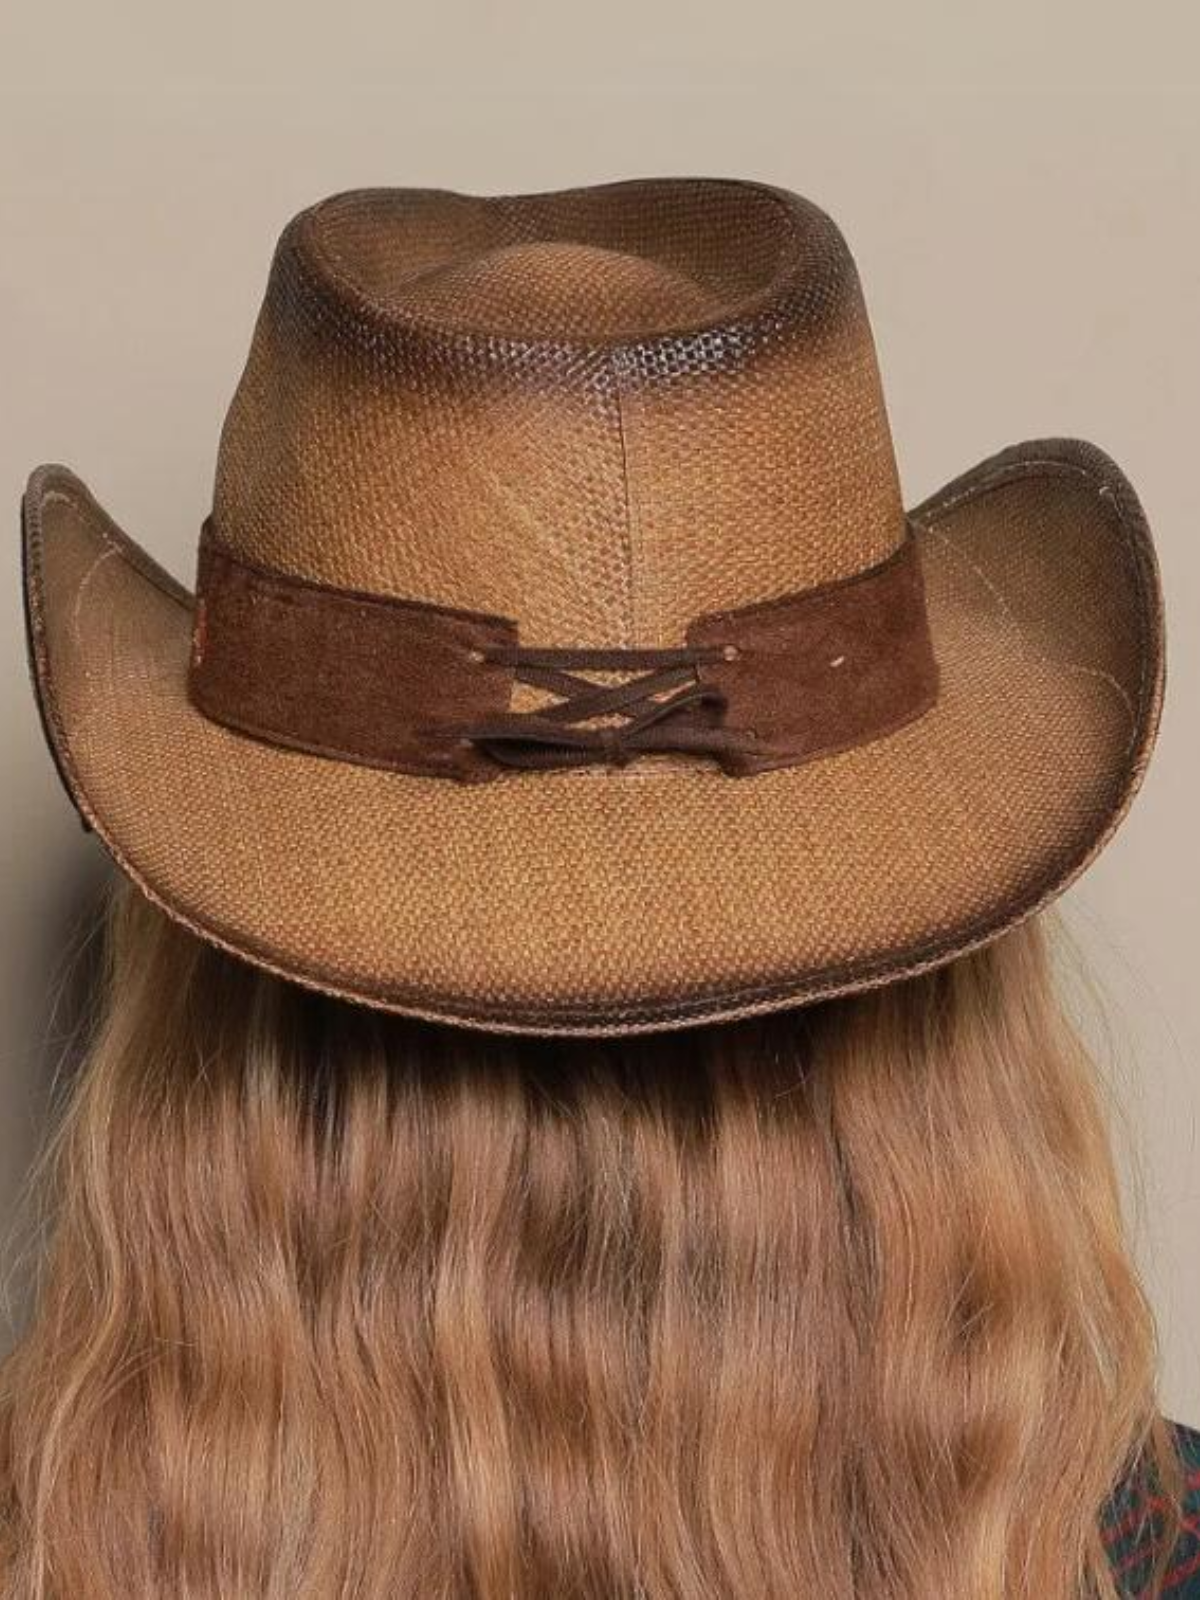 Women's Pink Flower Burnt Edge Cowgirl Hat